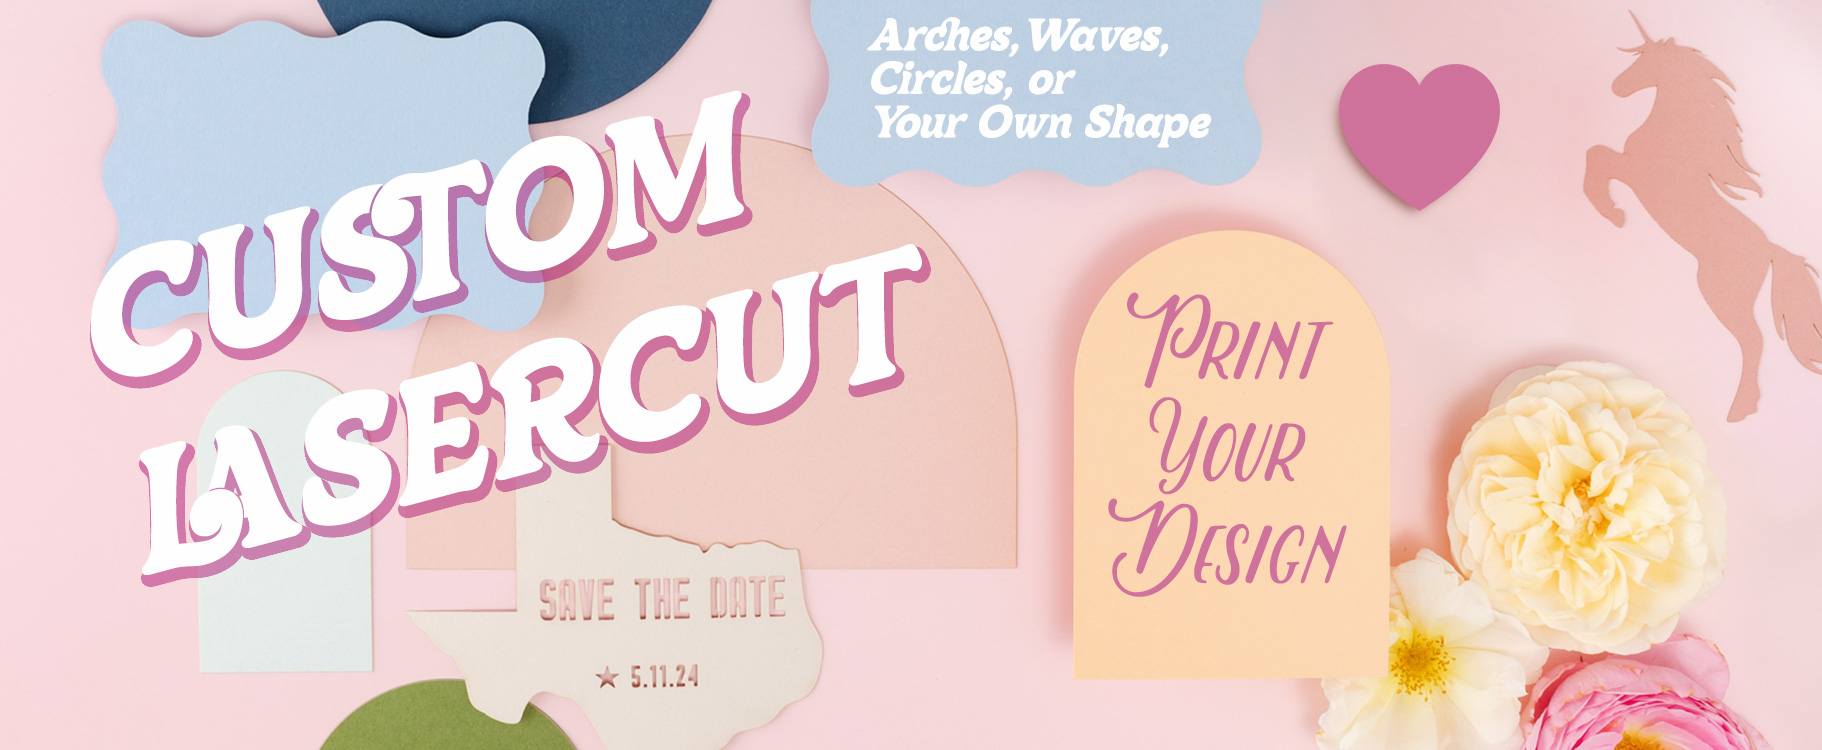 Custom Lasercut - Printed Arches, Waves, Circles and More!